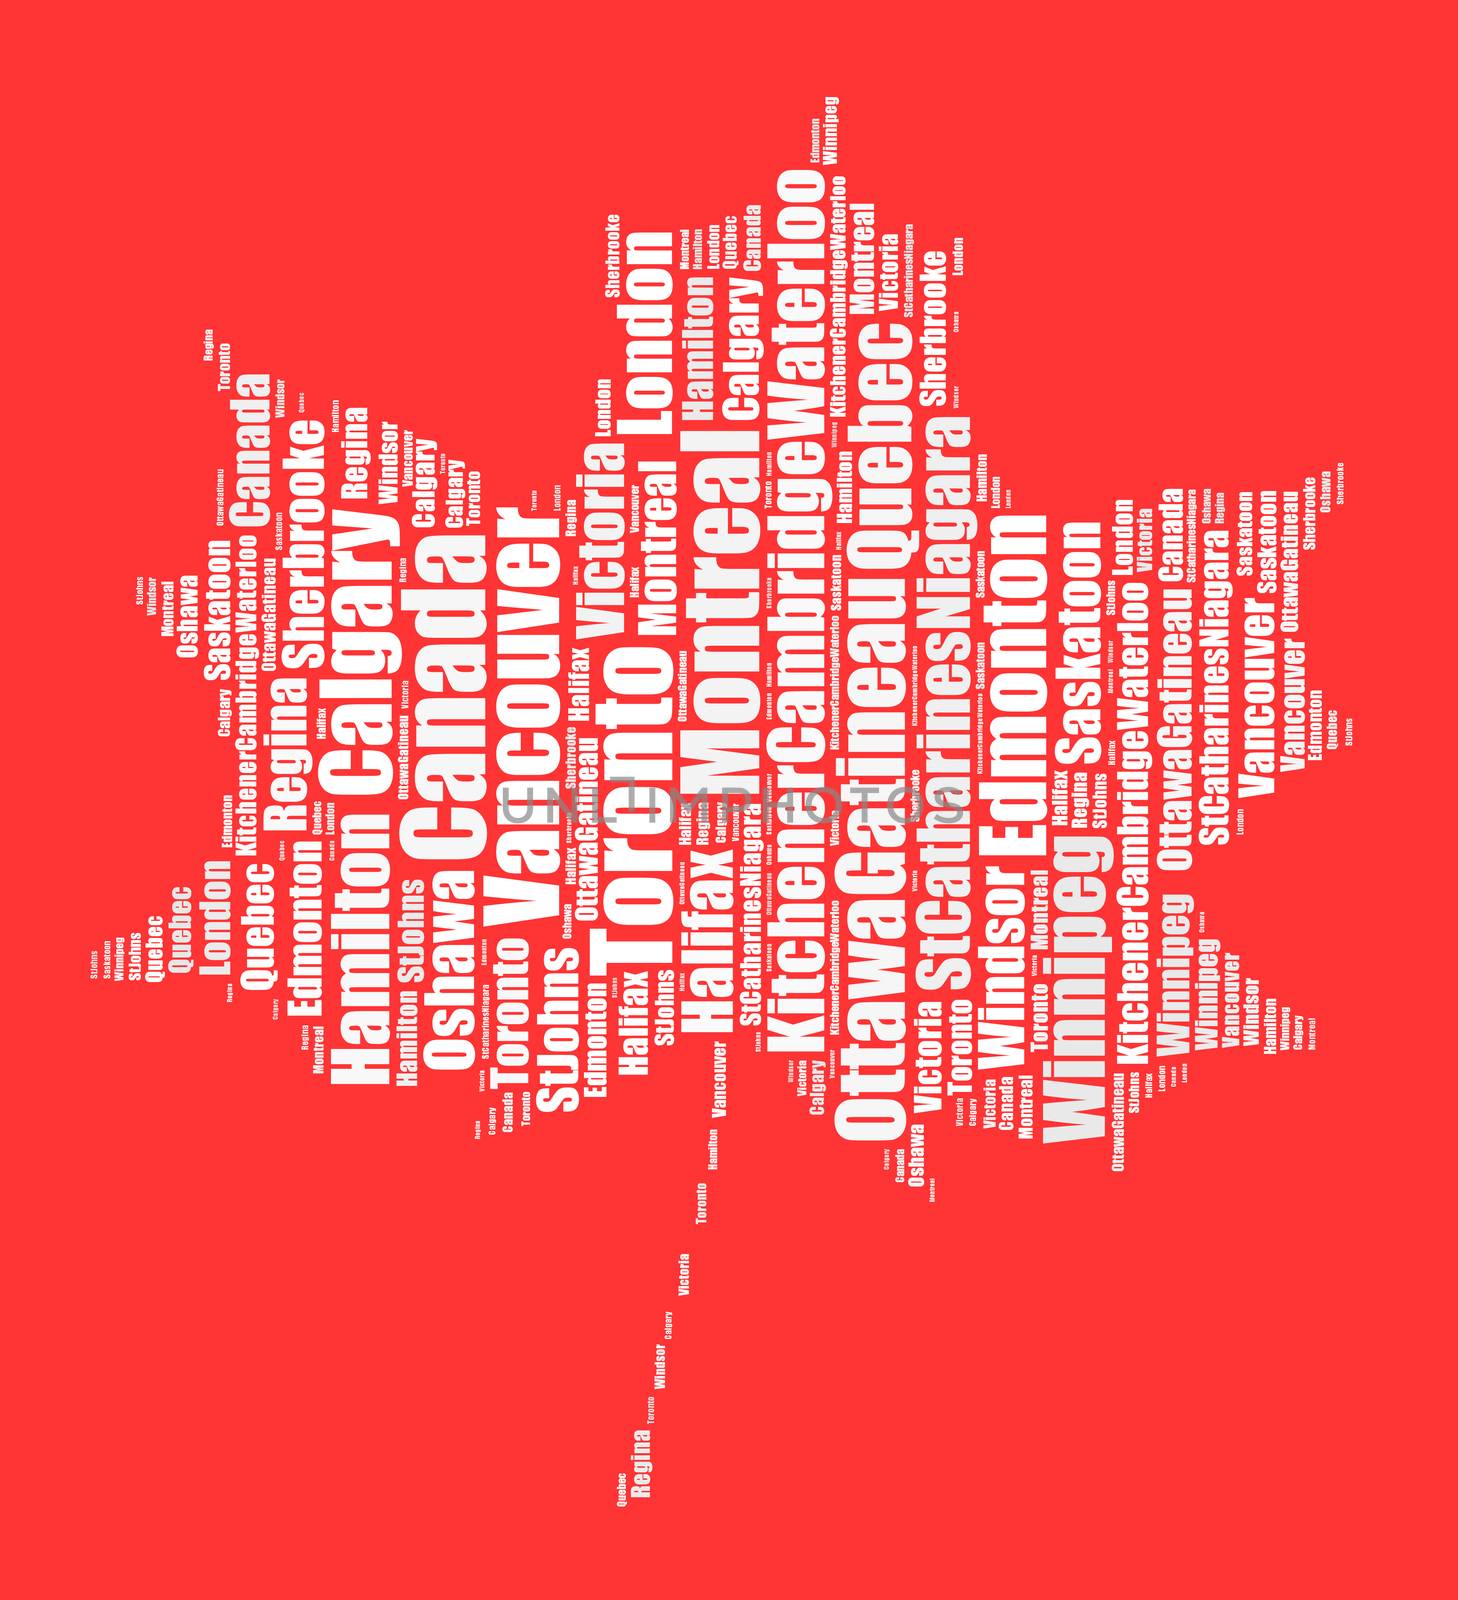 Largest census metropolitan areas in Canada word cloud concept